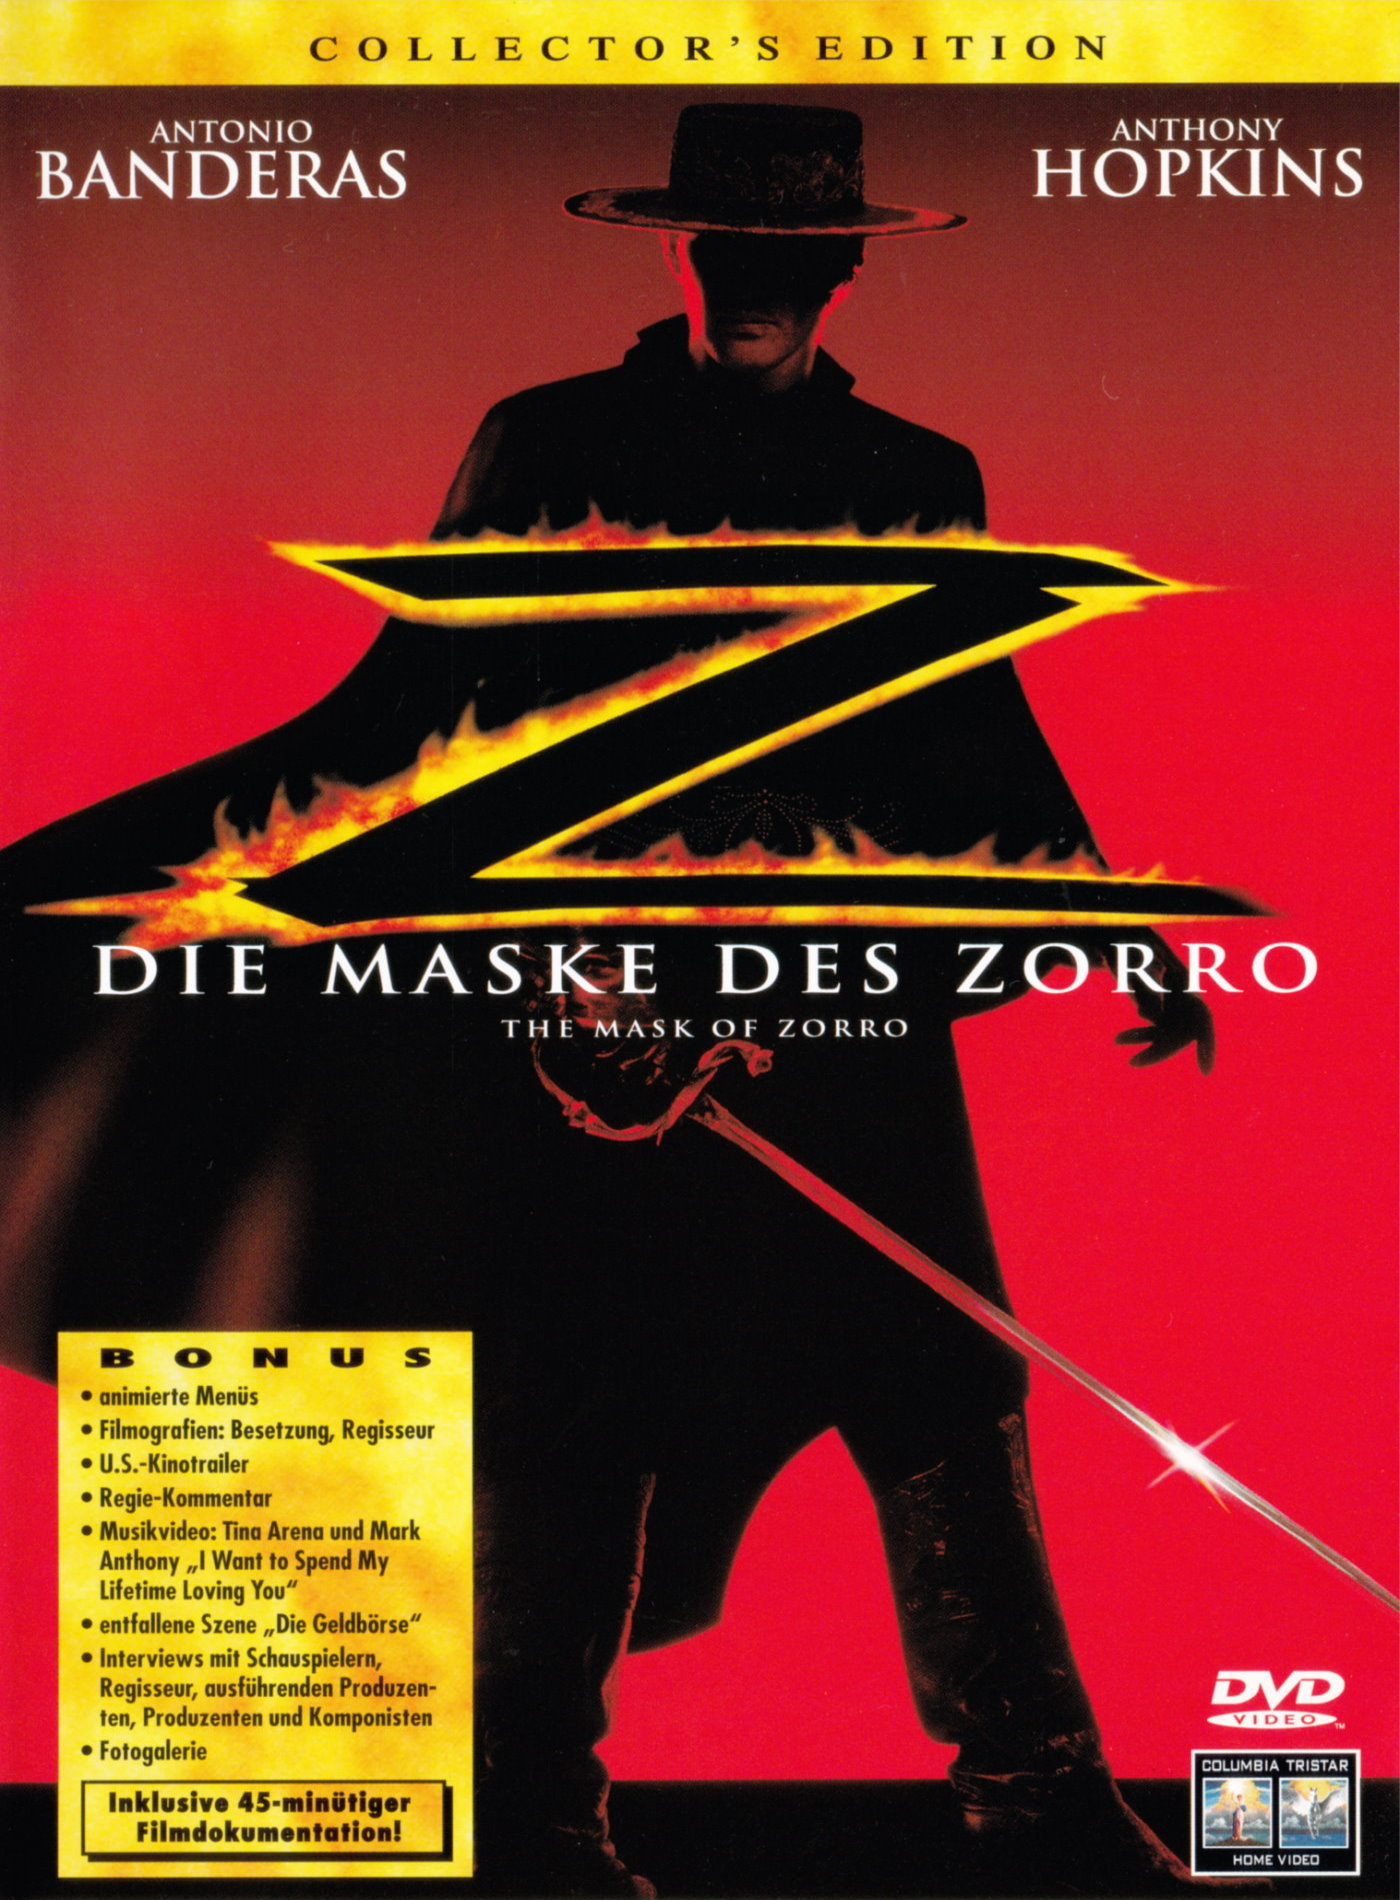 Cover - Die Maske des Zorro.jpg